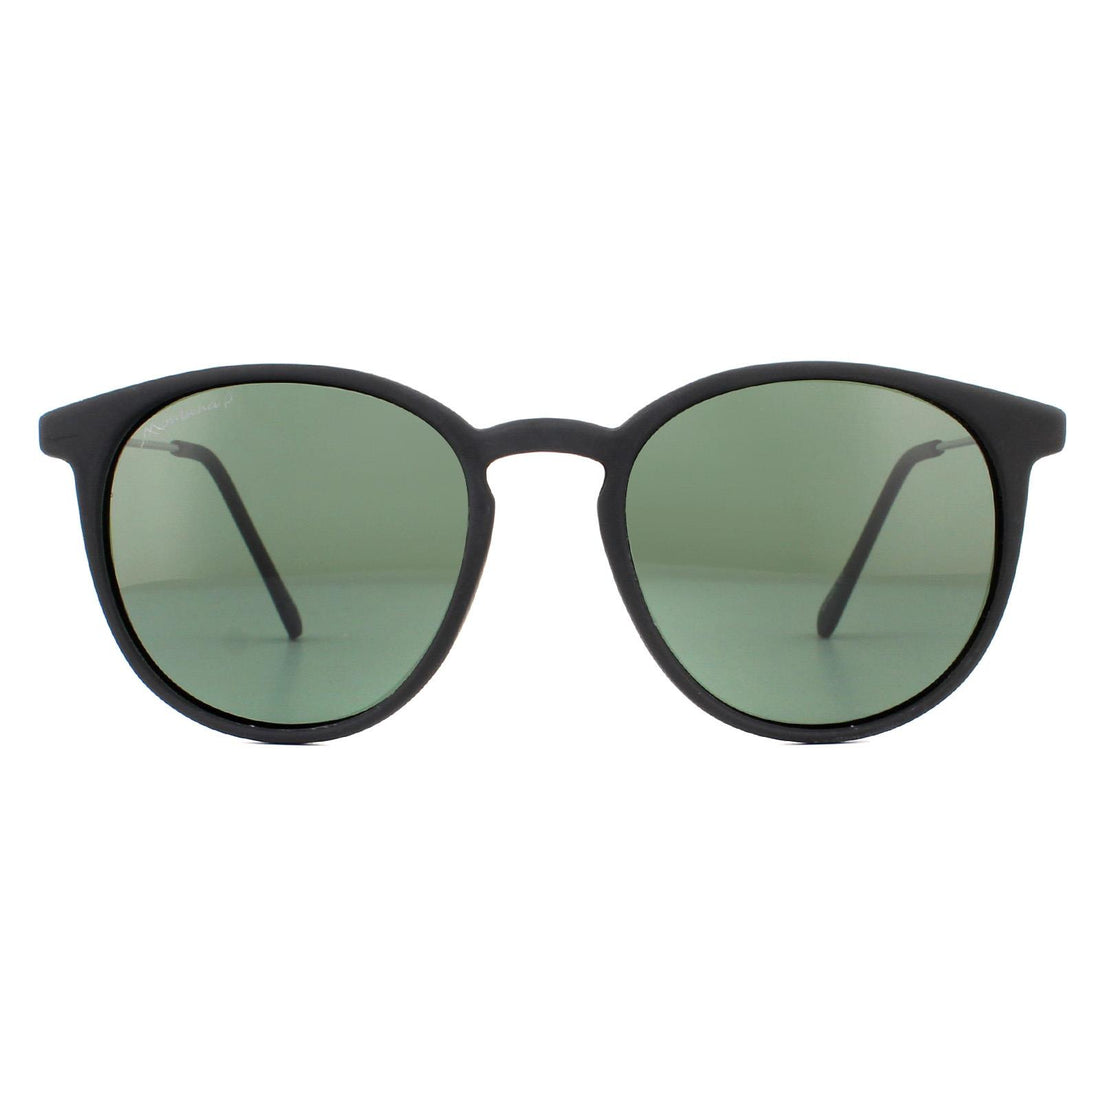 Montana MP33 Sunglasses Black Rubbertouch / G-15 Green Polarized